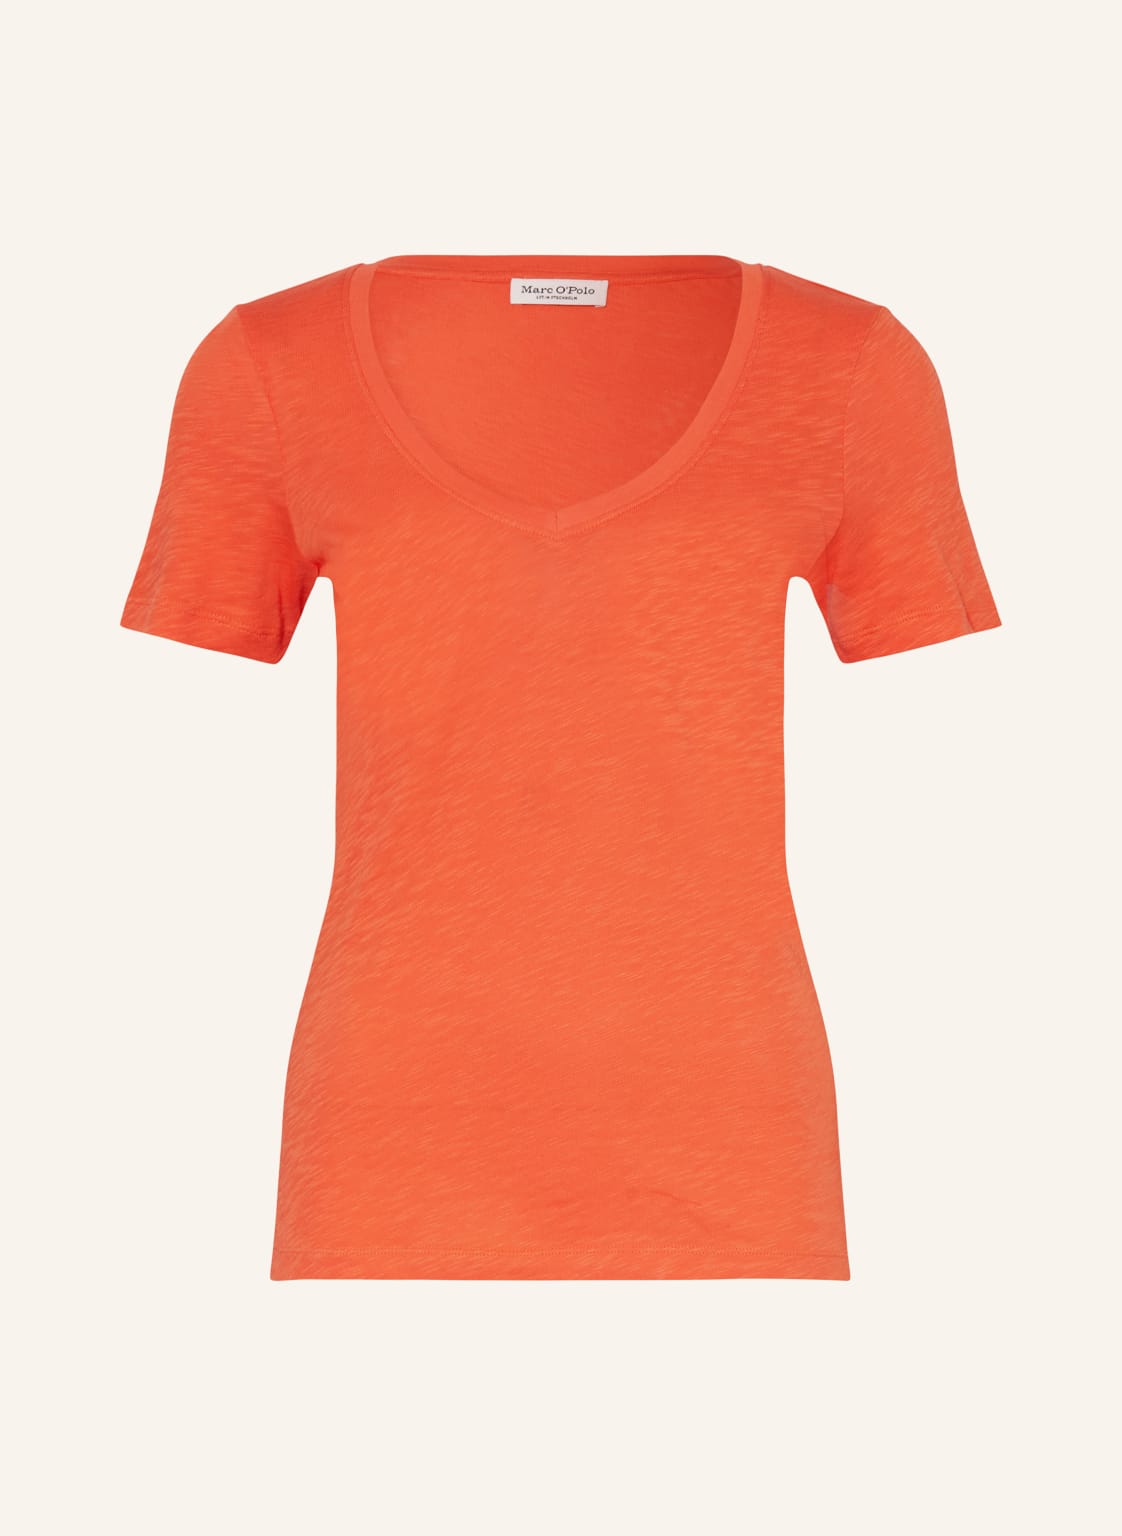 Marc O'polo T-Shirt orange von Marc O'Polo